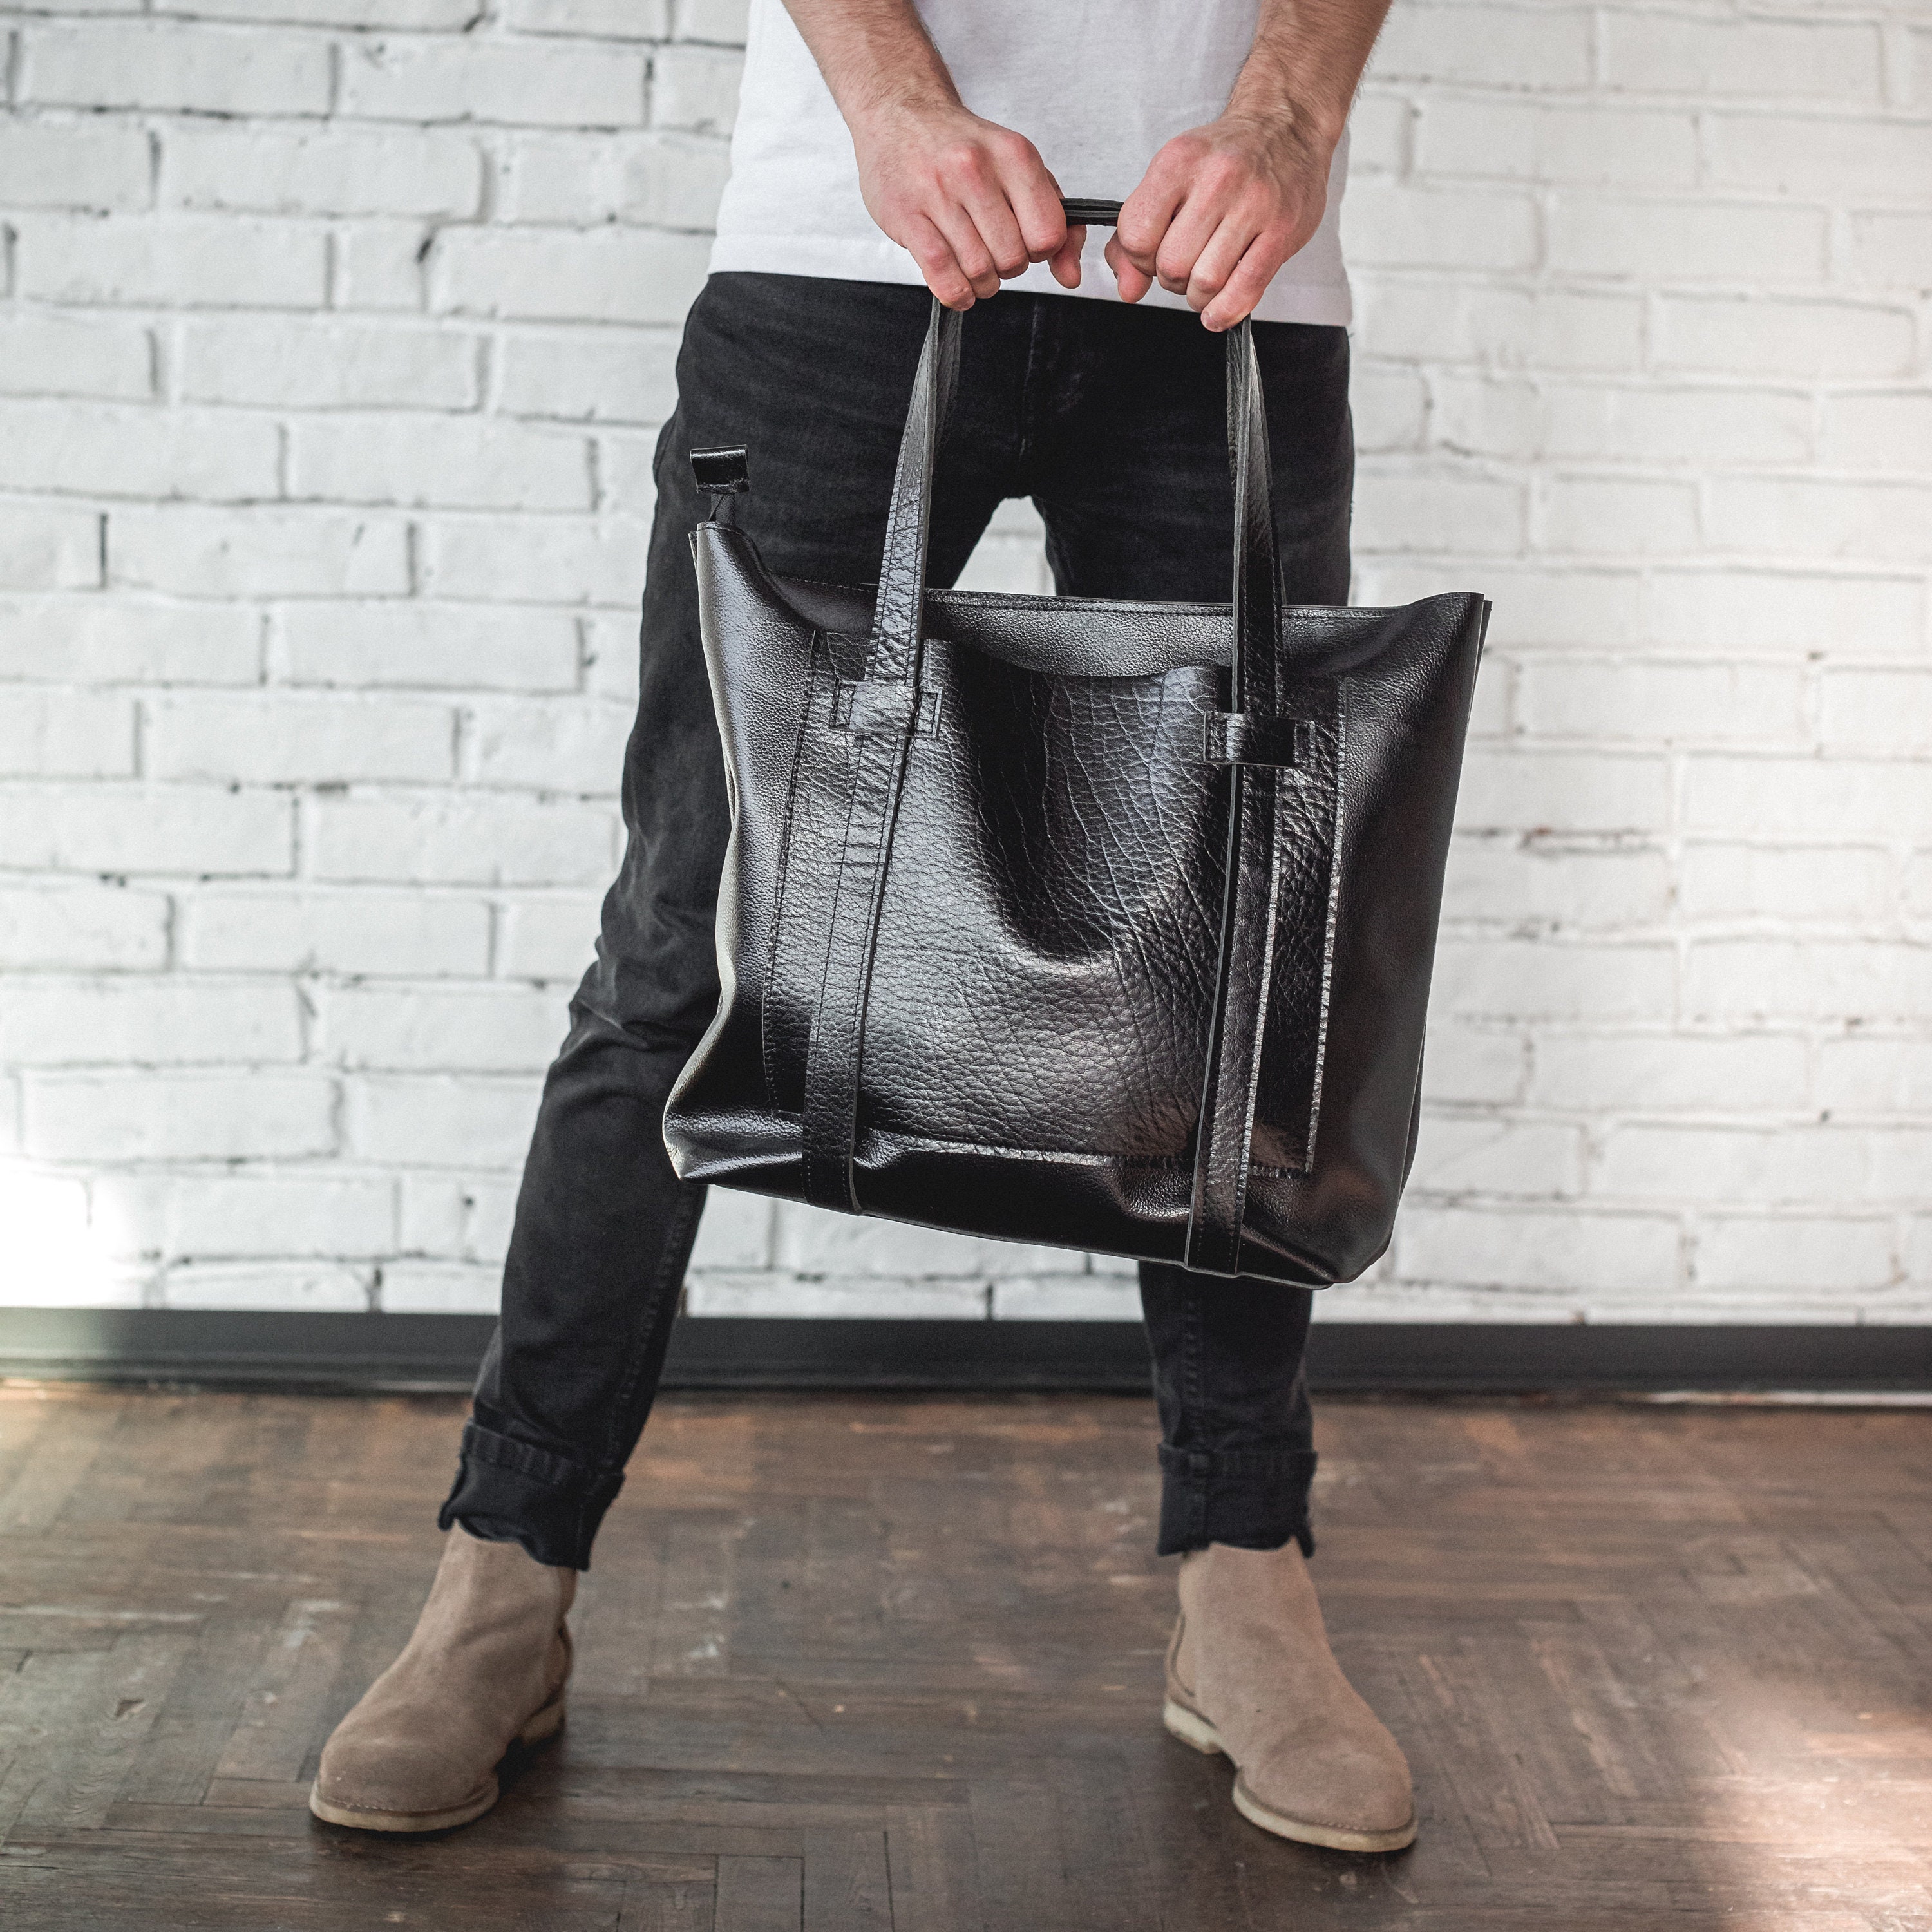 Leather Tote Bag For Men With Zipper Black Leather Shoulder | Etsy